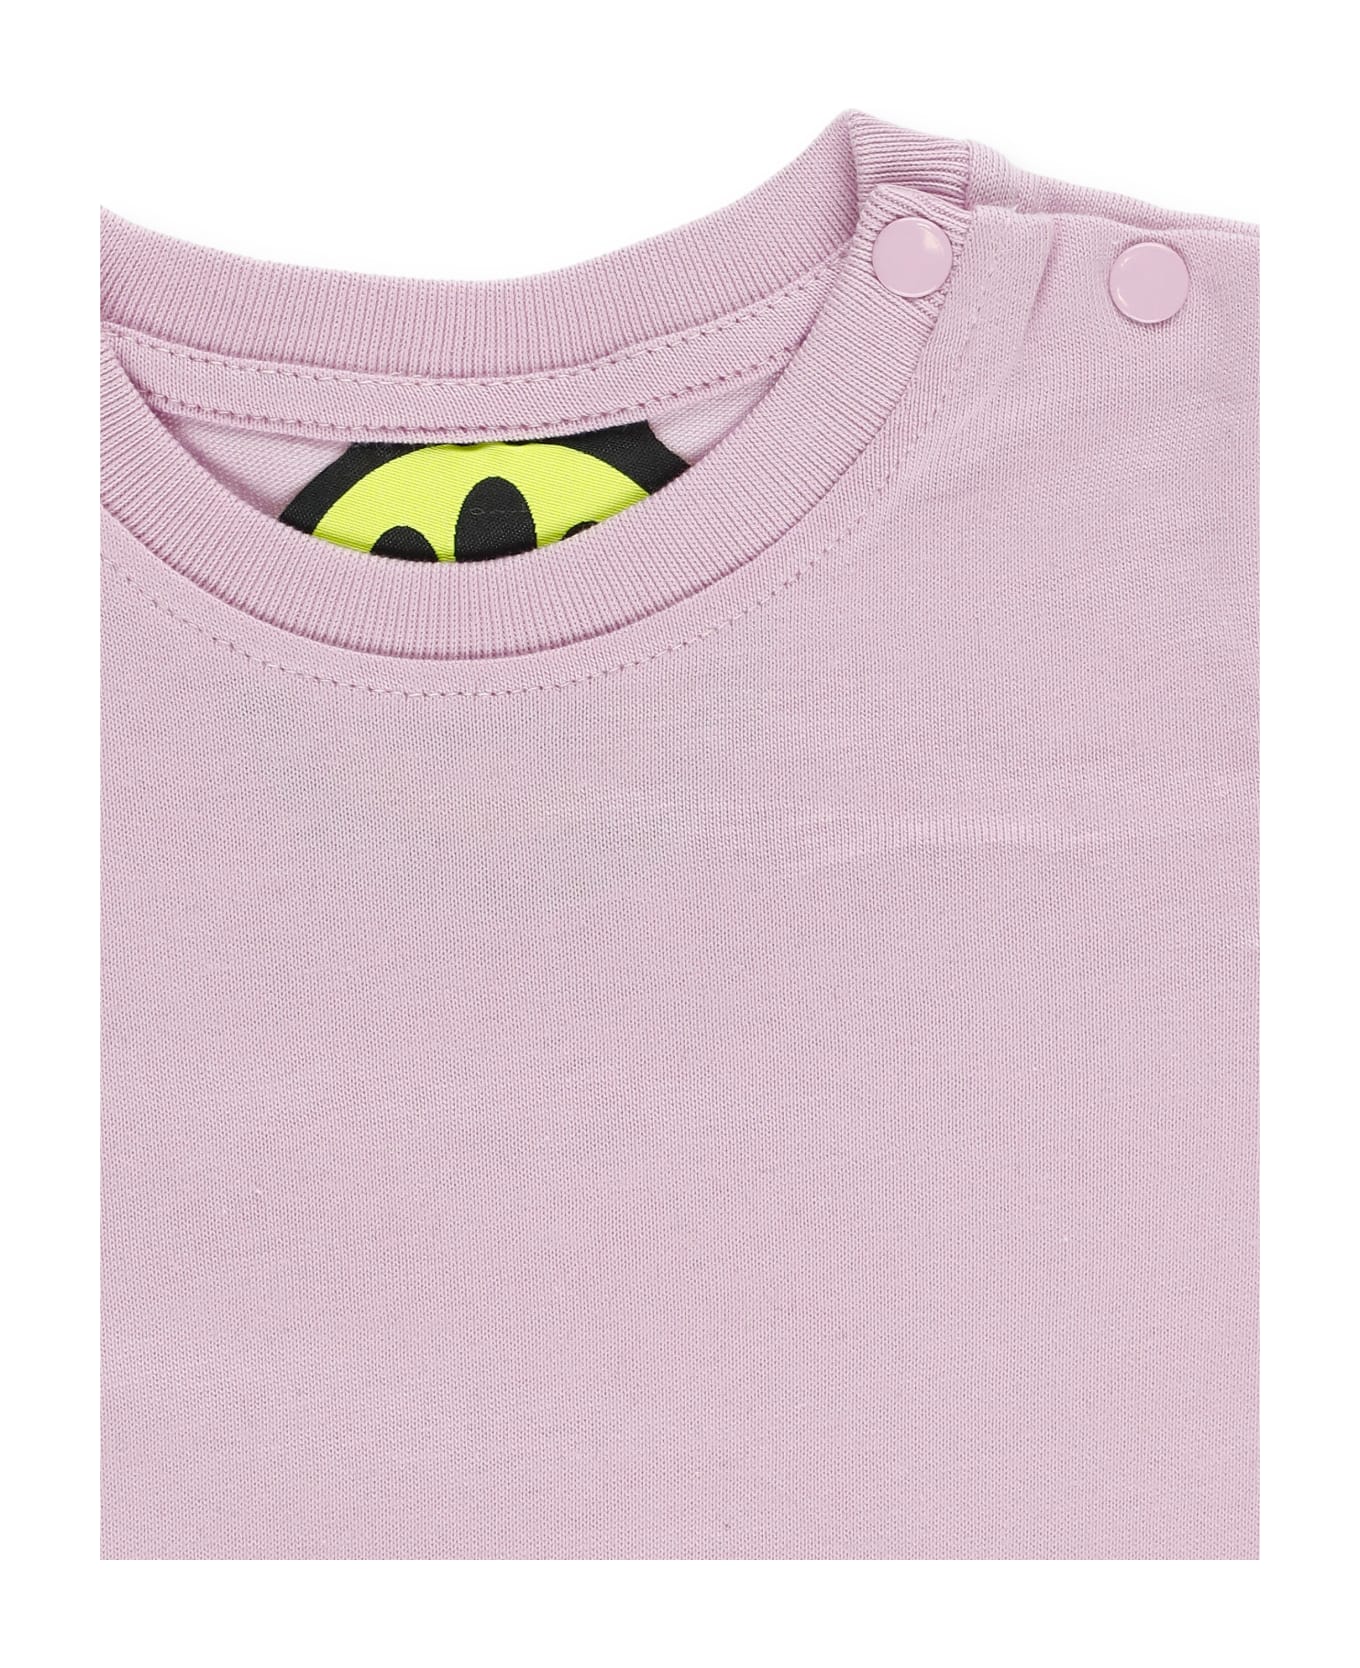 Barrow Logoed T-shirt - Pink